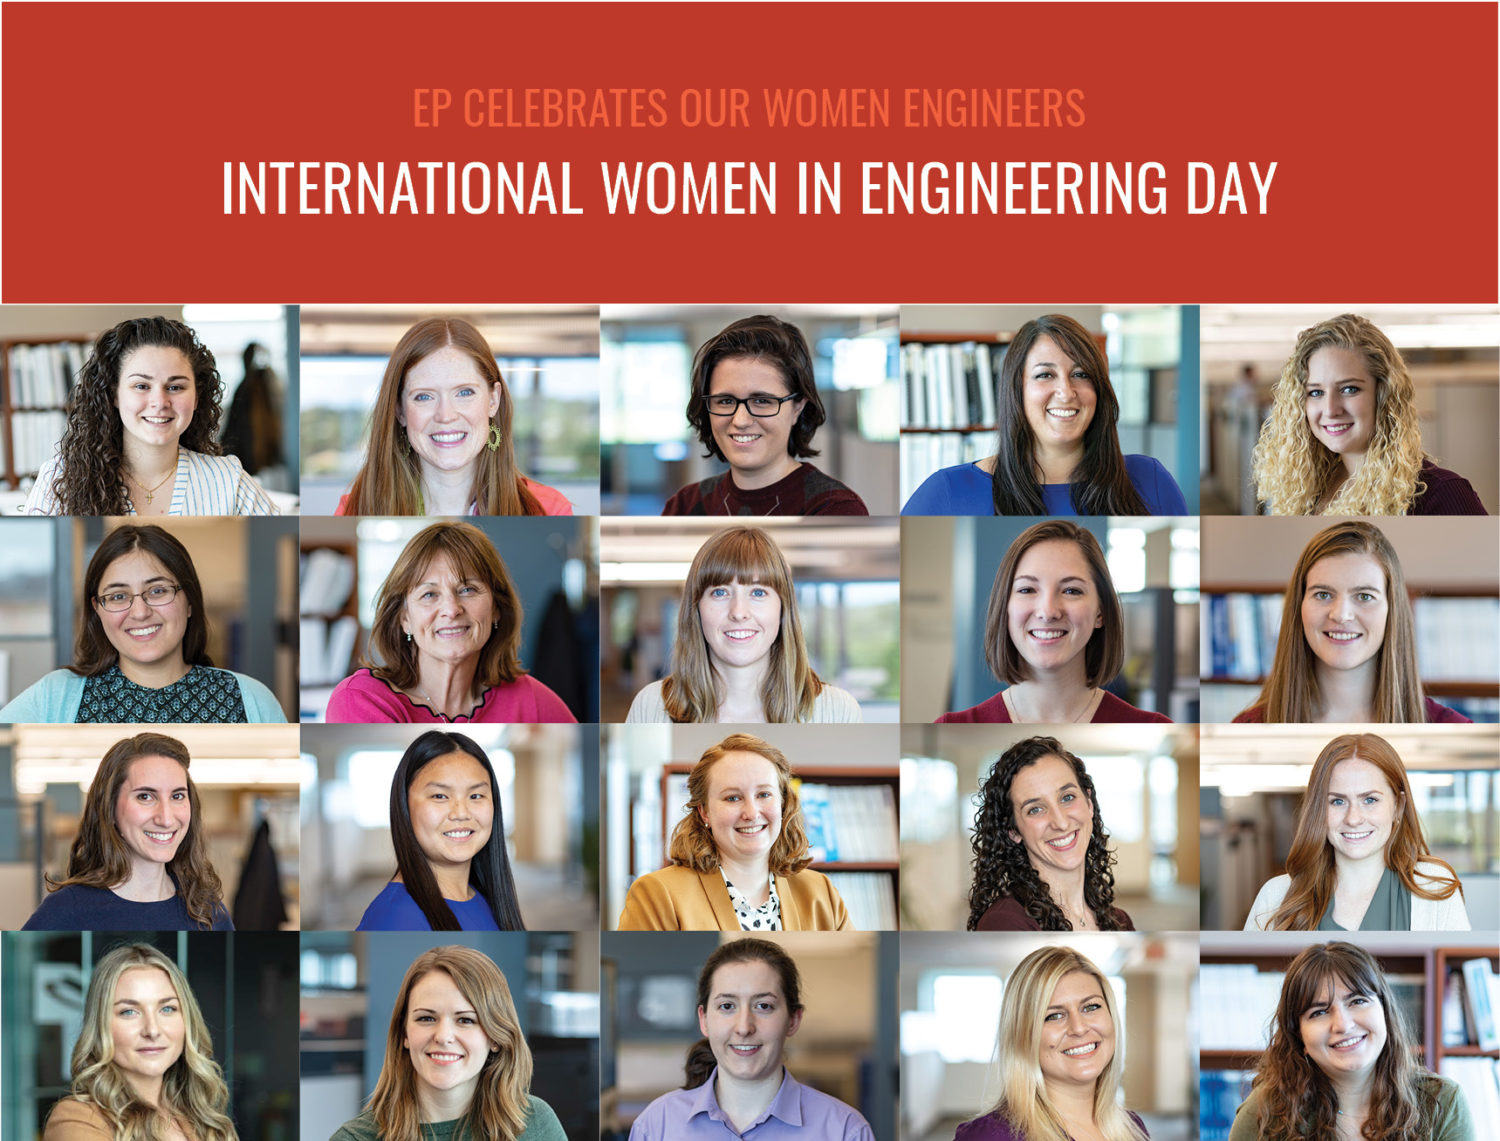 EP Celebrates International Women in Engineering Day! Environmental